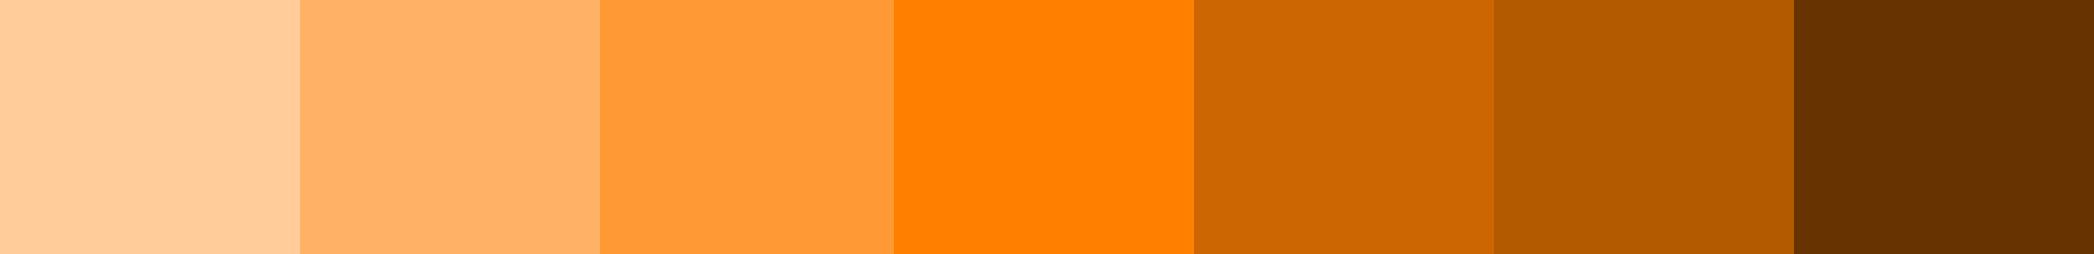 7 shades of a orange colour.